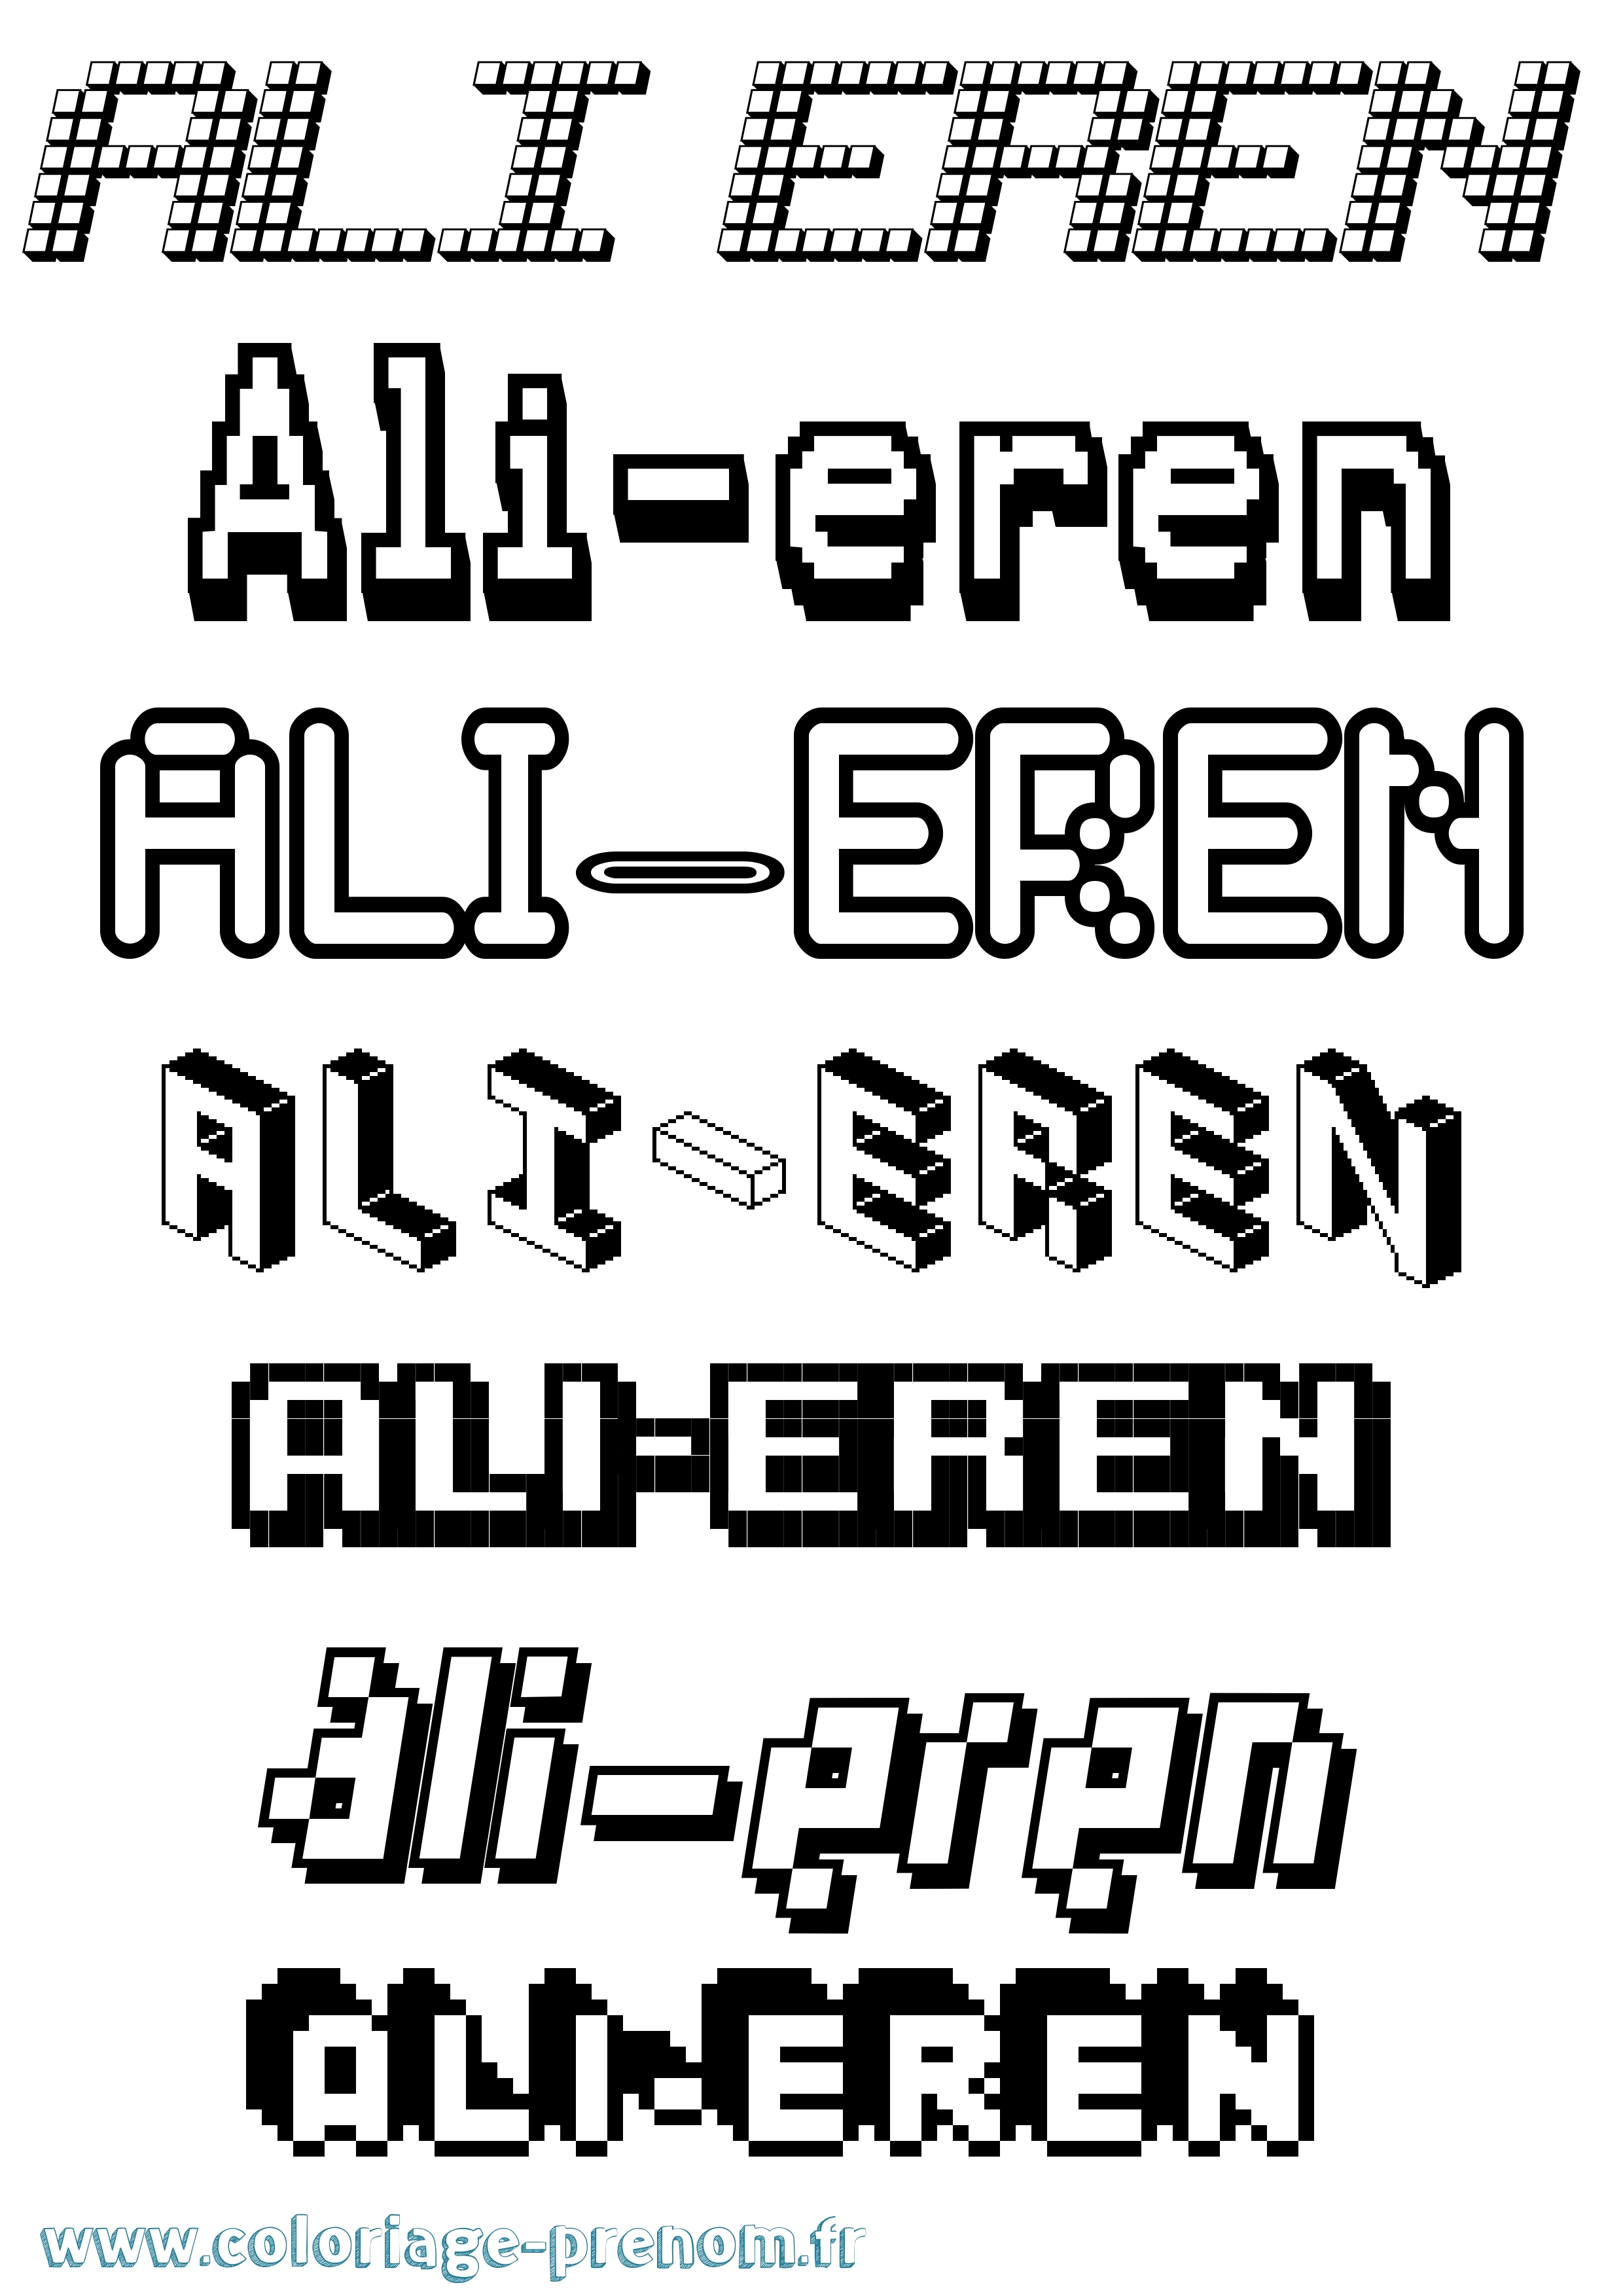 Coloriage prénom Ali-Eren Pixel